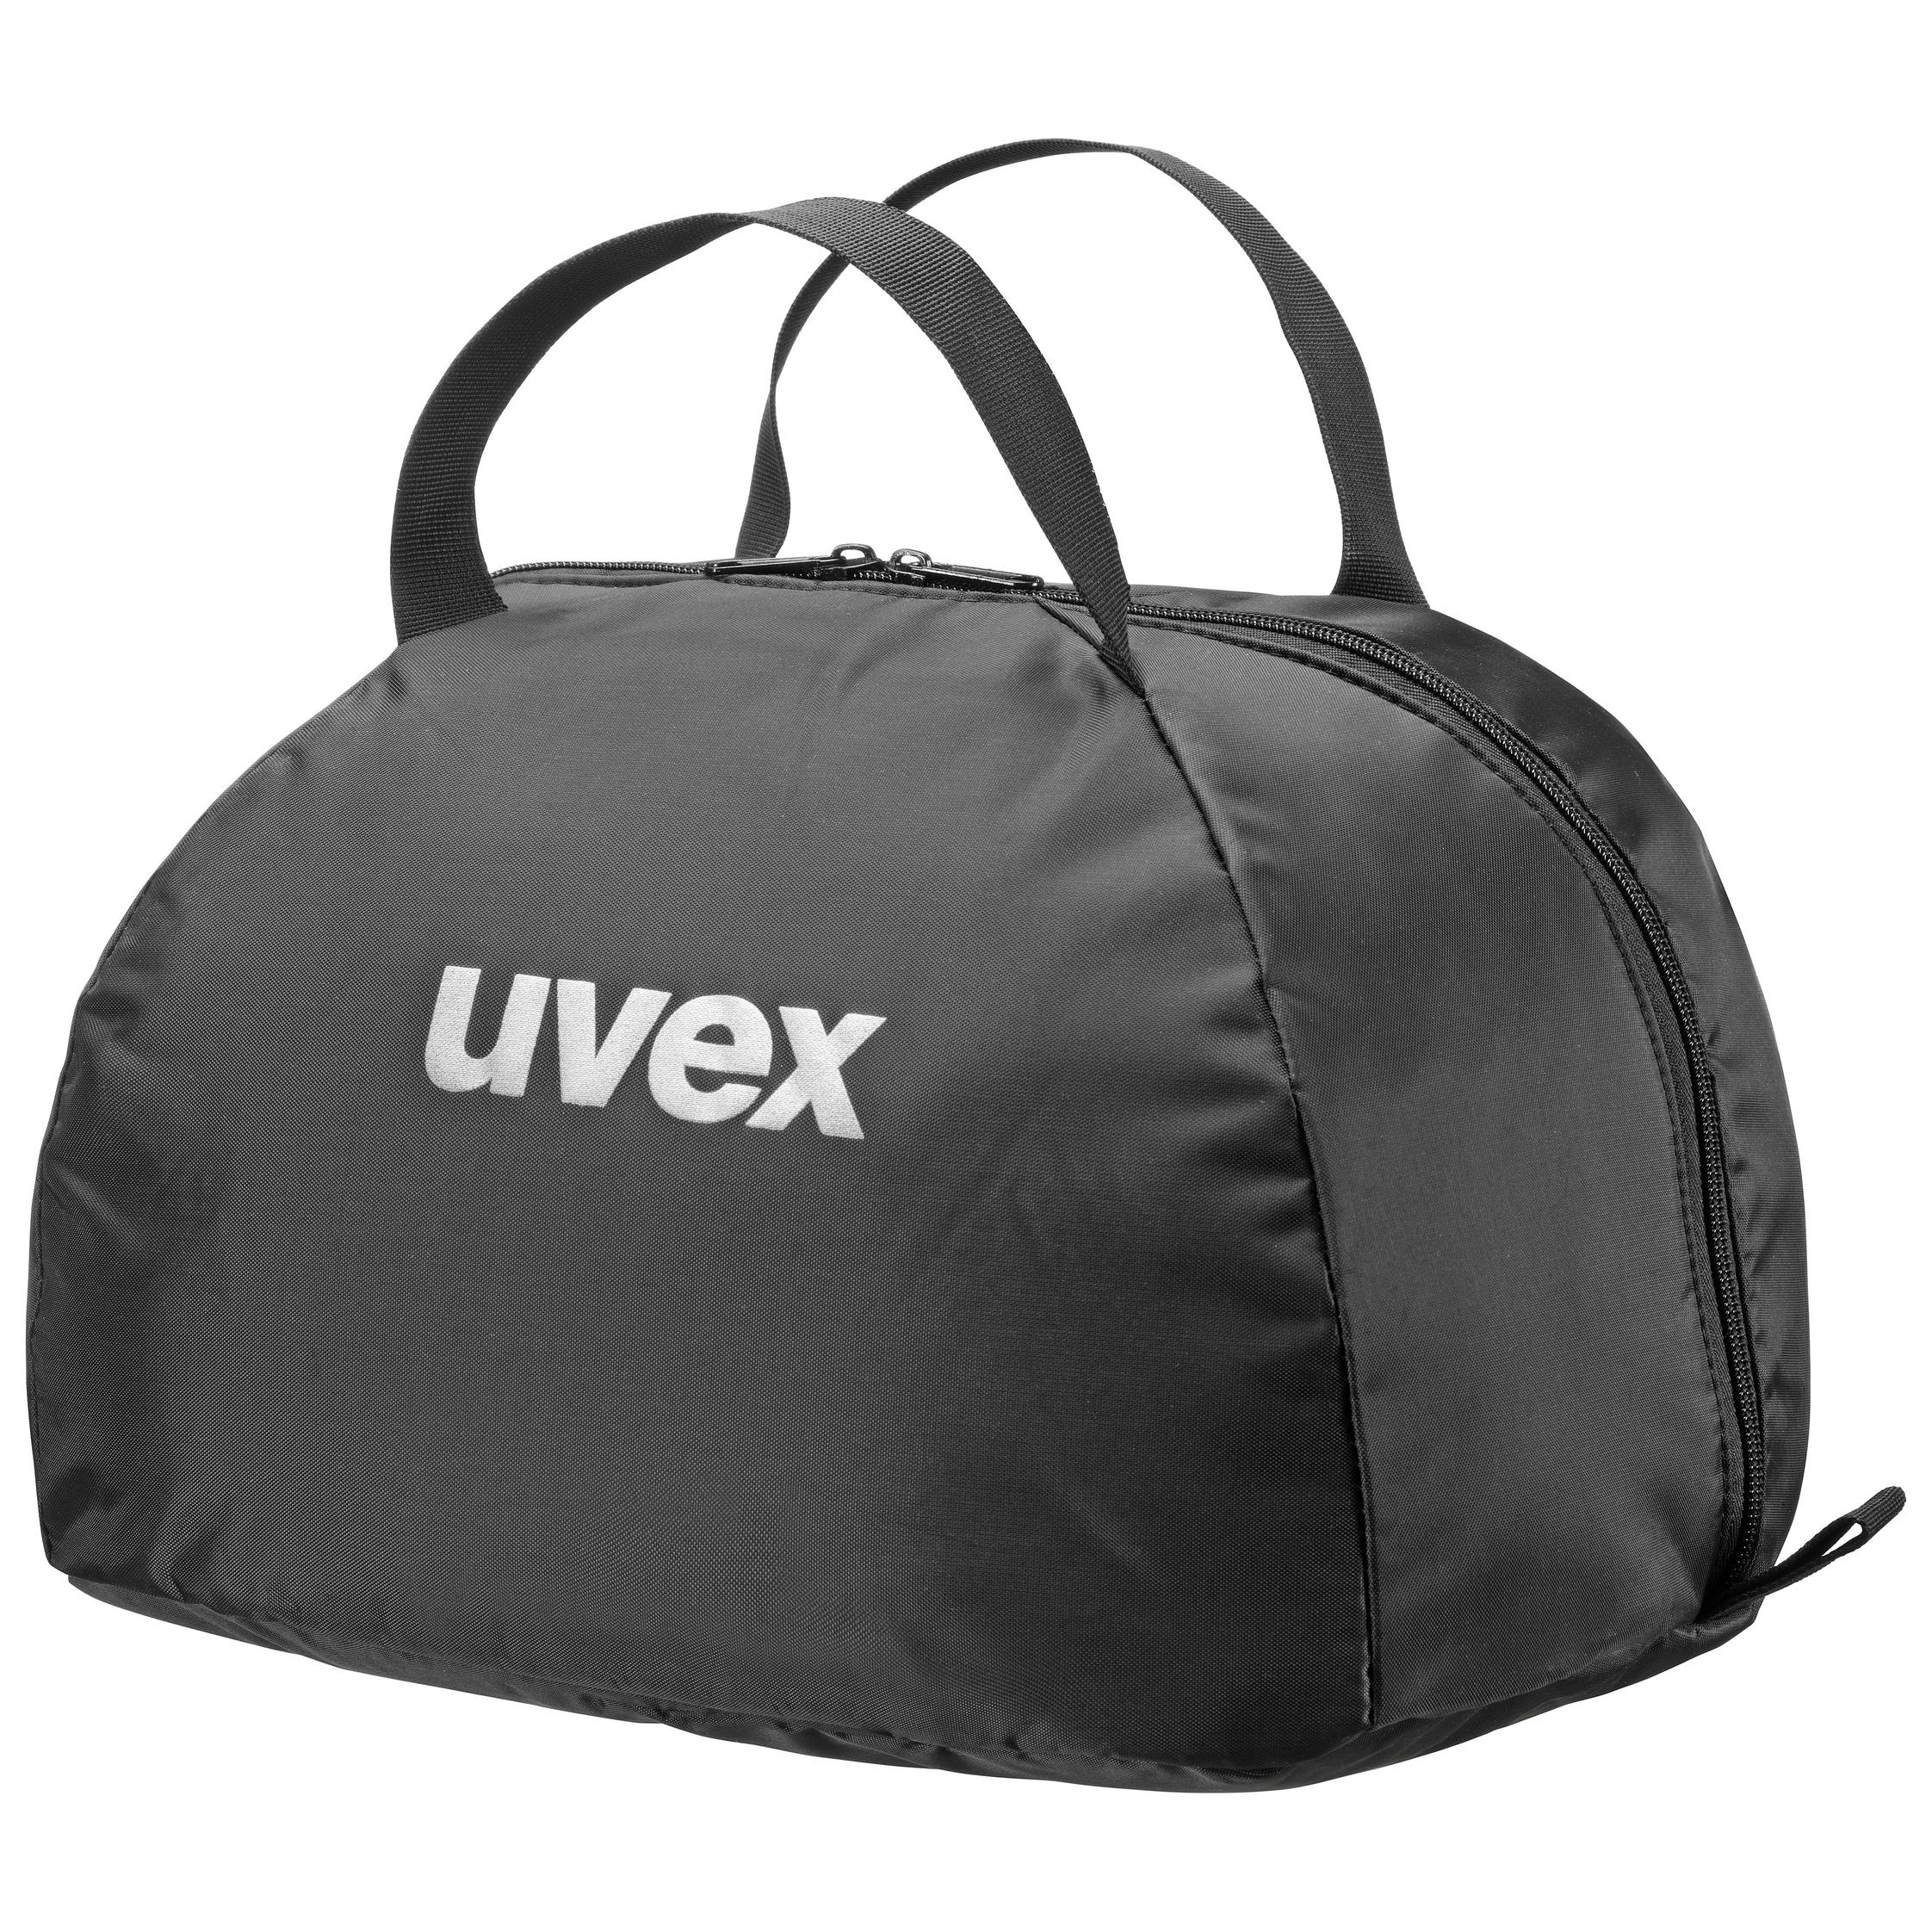 uvex equestrian helmet bag